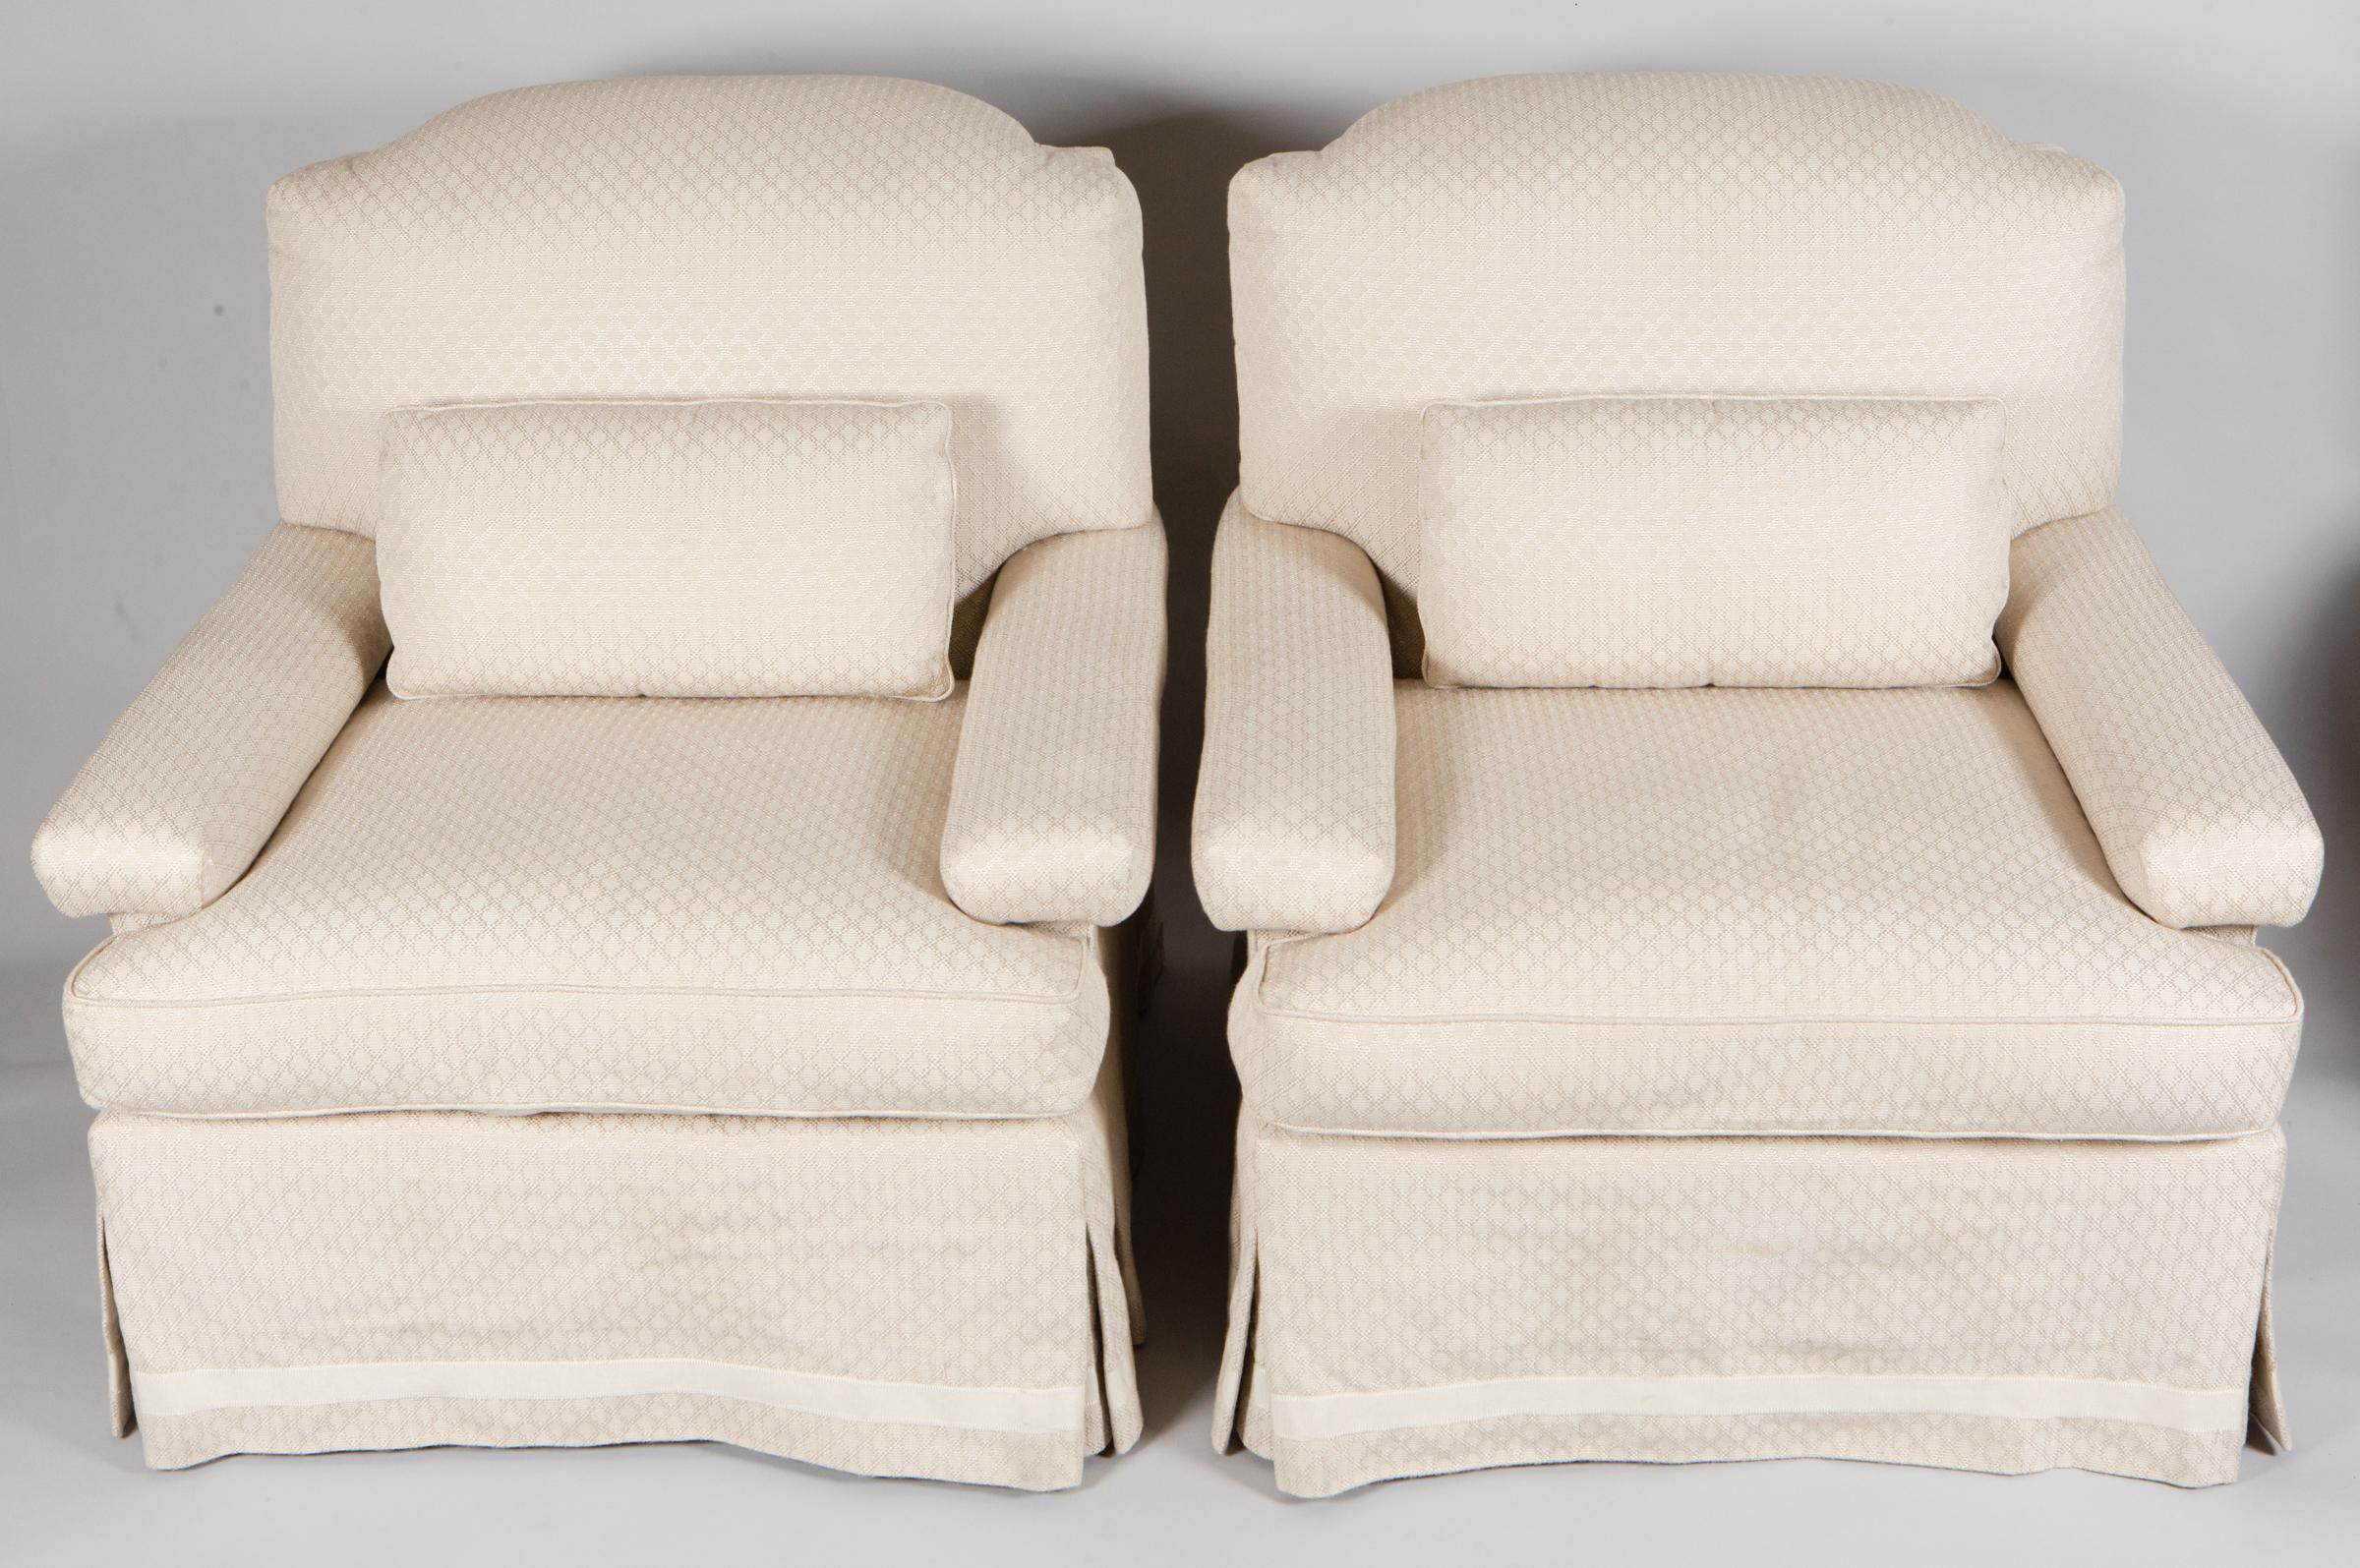 Pair of white linen club chairs, linen fabric has subtle geometric design.